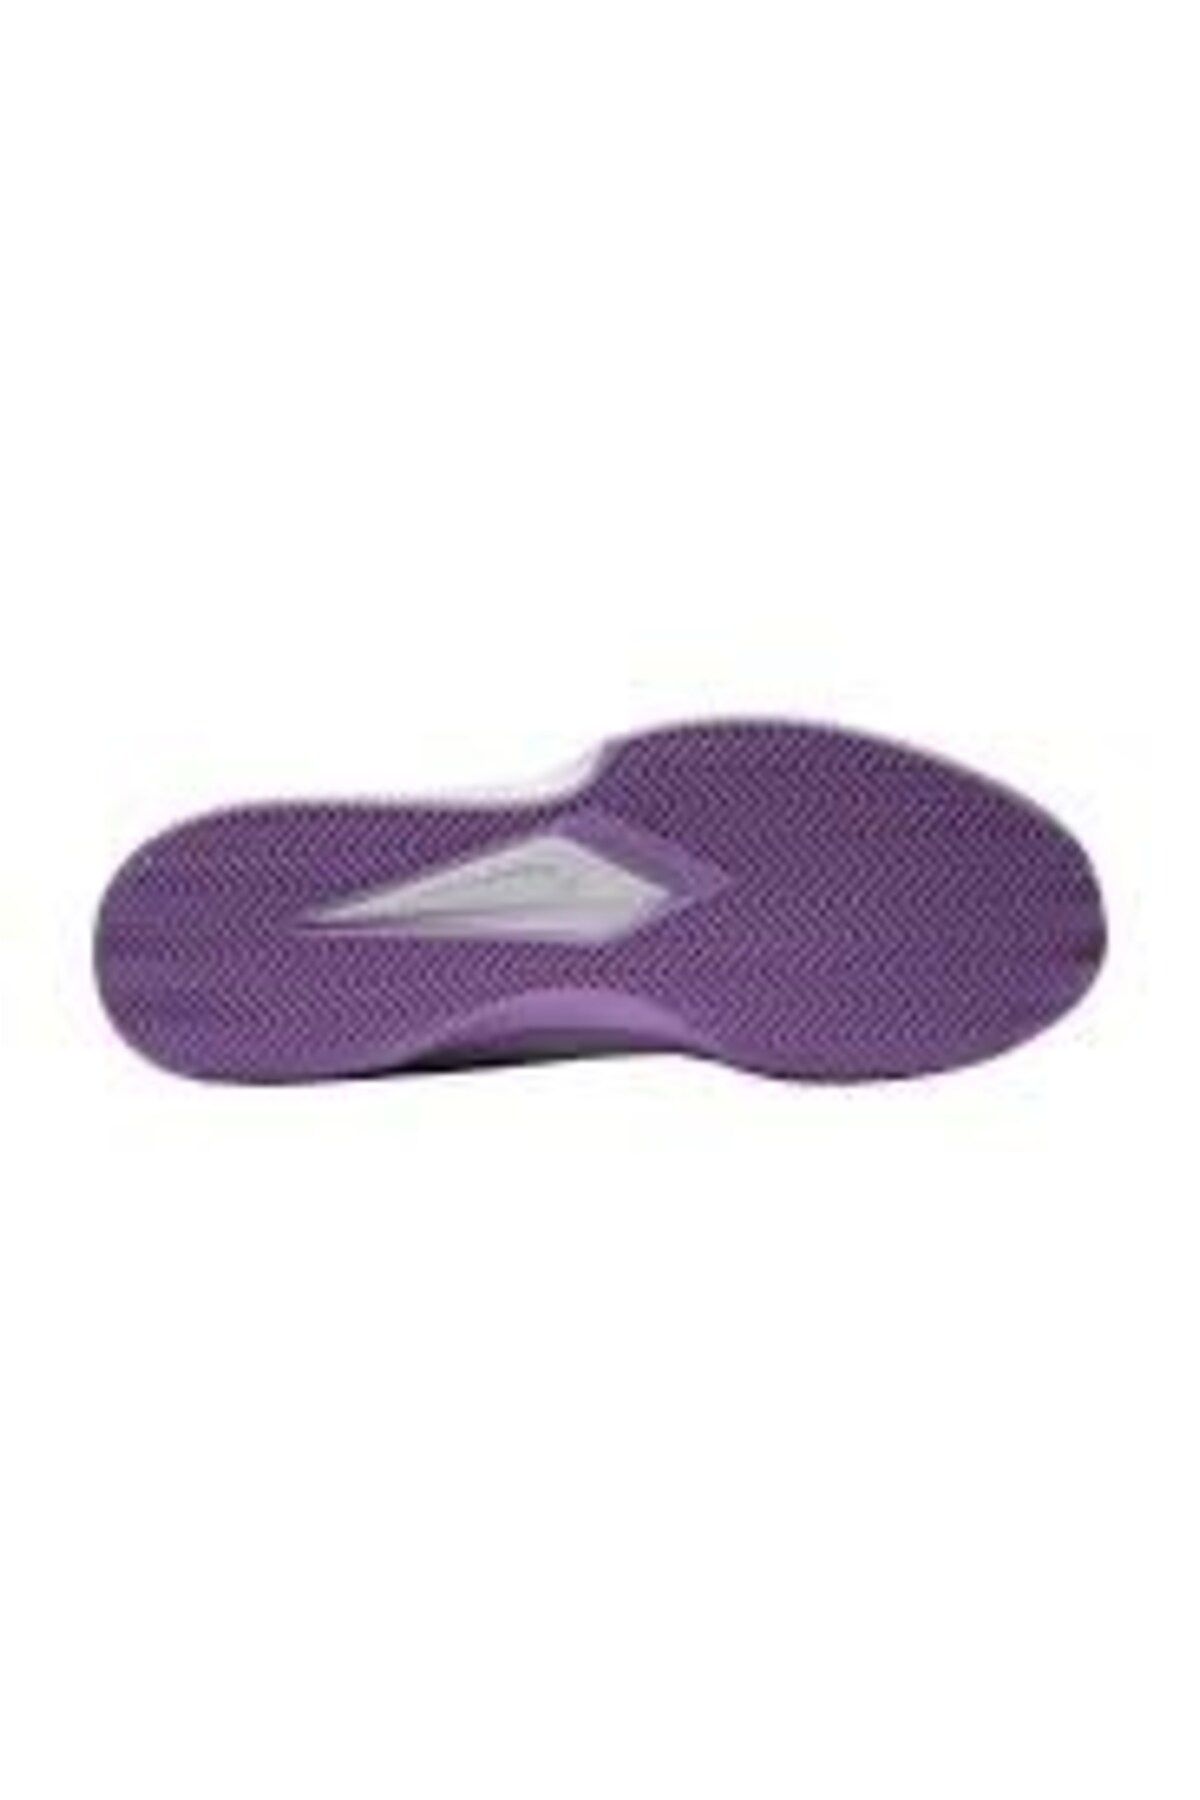 Nike Vapor Lite Cly   Nike  Tenis Ayakkabısı   DH2945-033